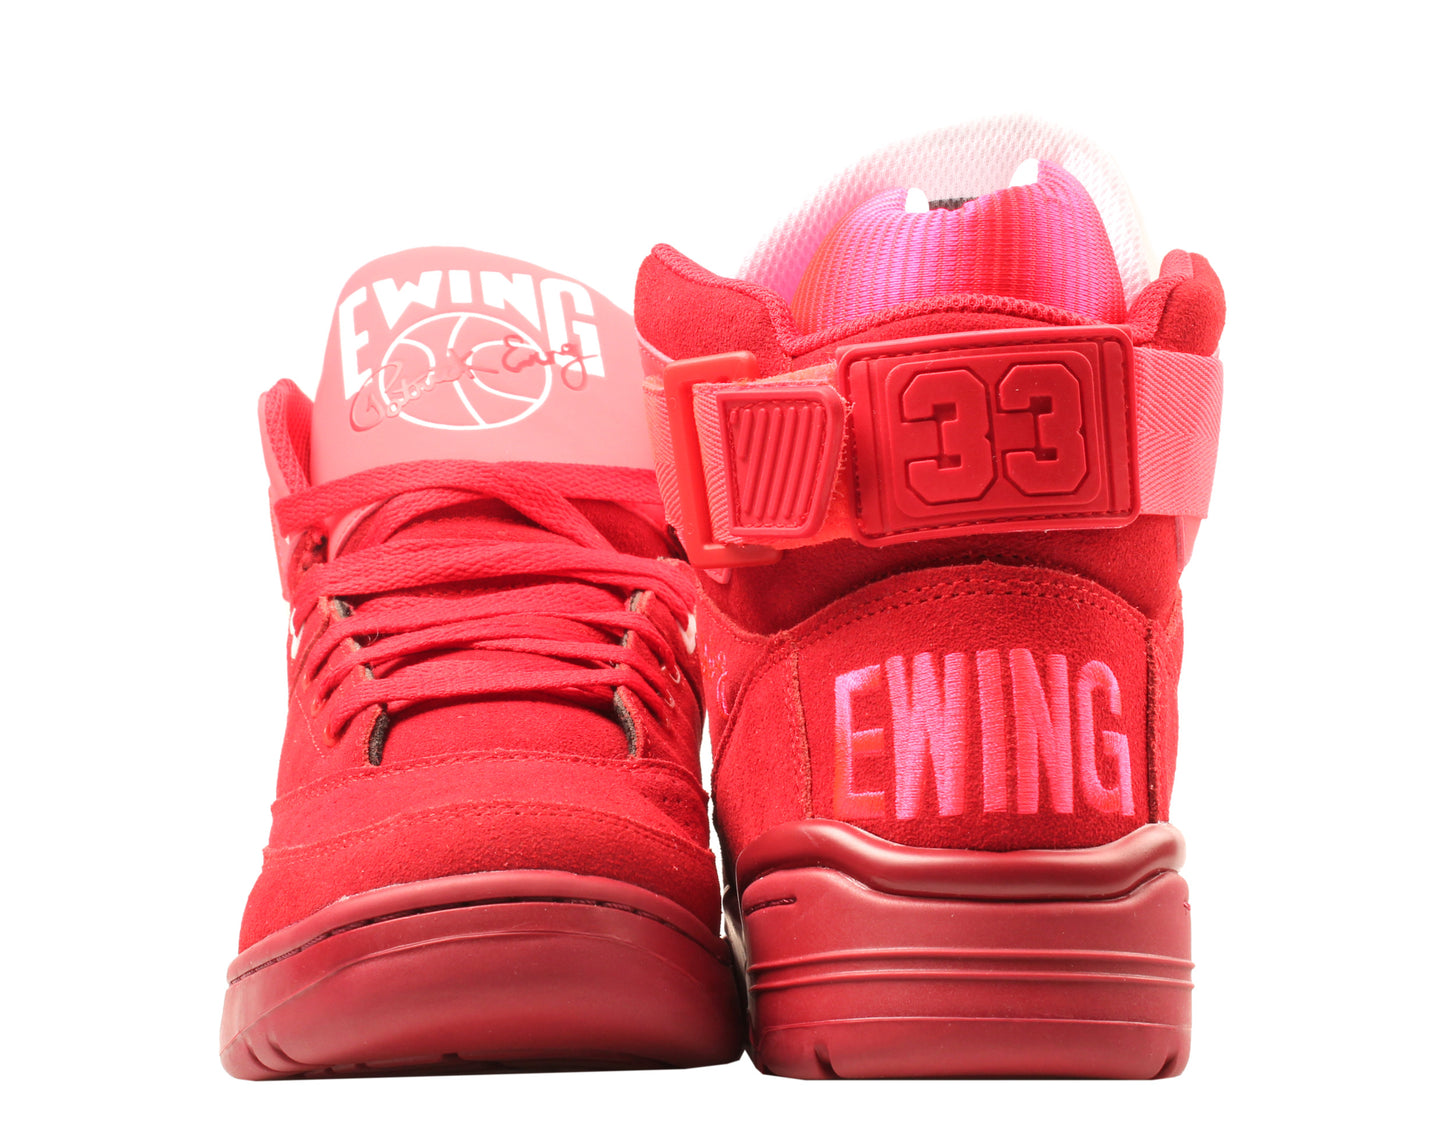 Ewing Athletics Ewing 33 Hi Valentines Day Men's Basketball Shoes